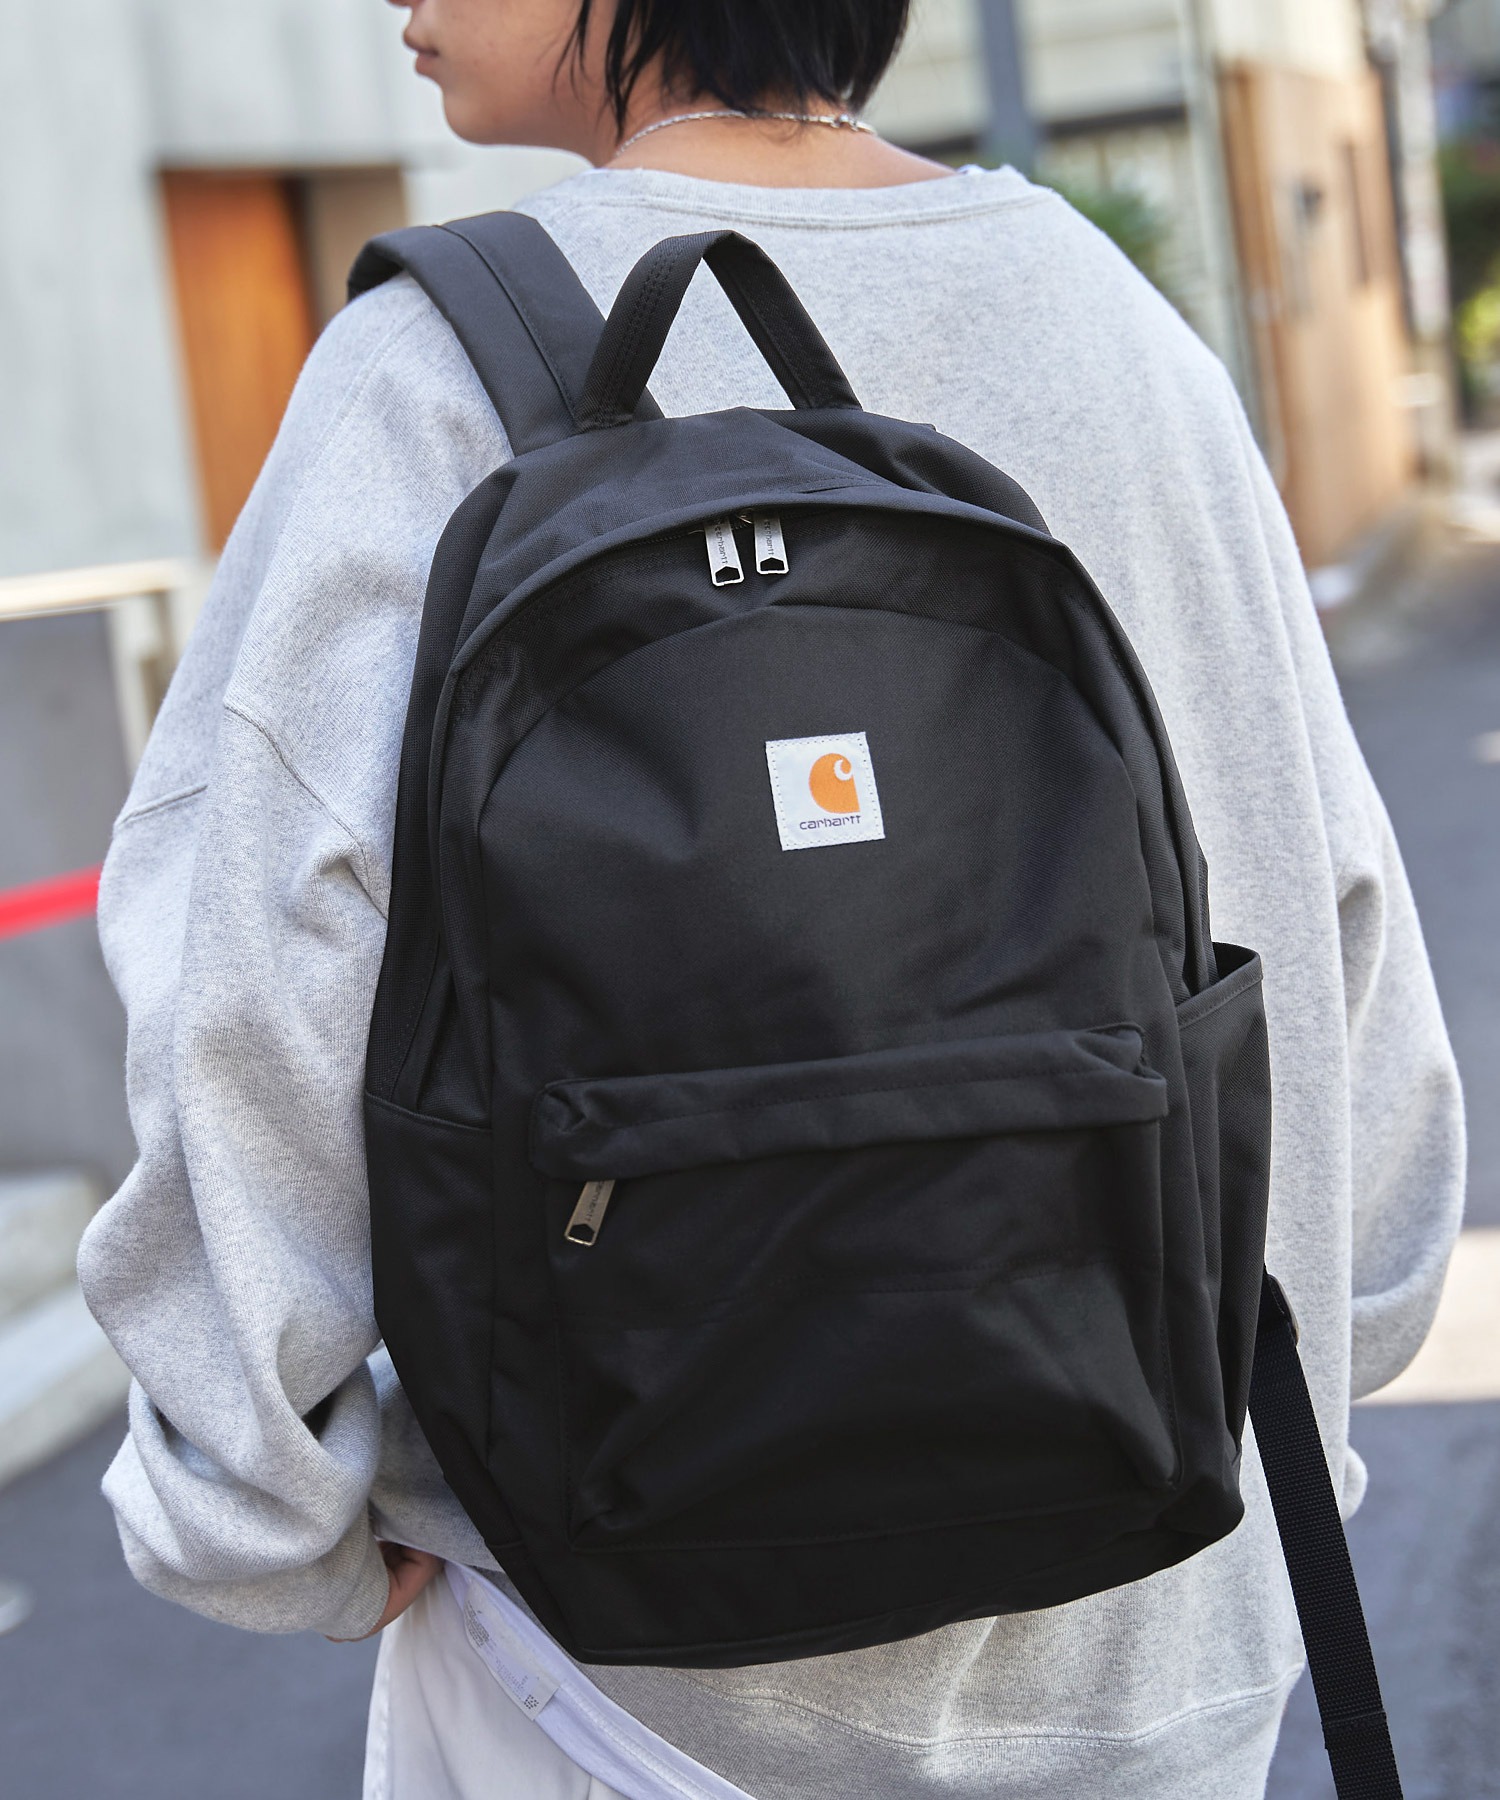 carhartt(カーハート) Essential 21L Laptop Backpack エッセンシャル ラップトップ バックパック